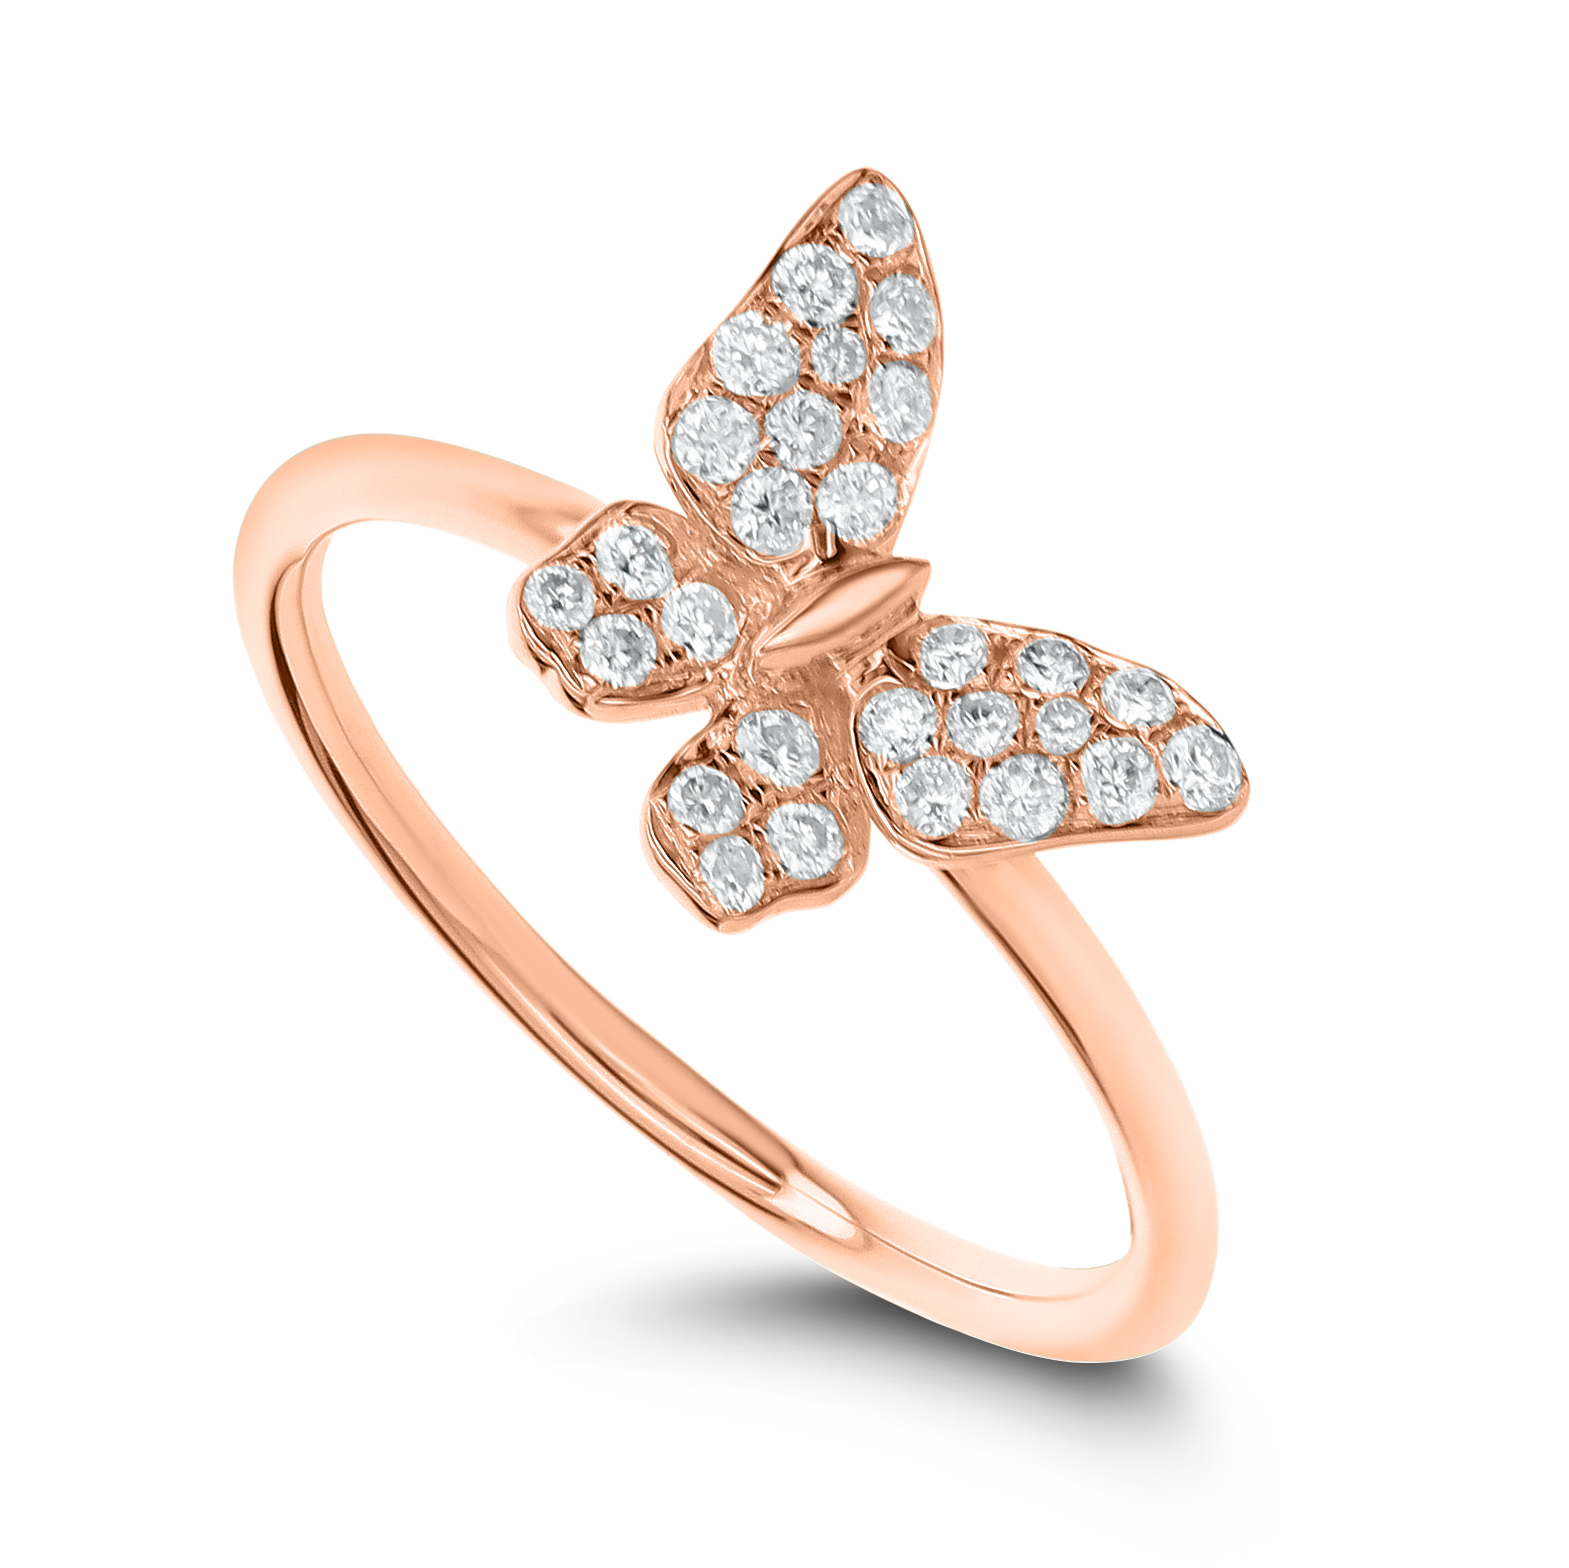 18kt rose gold diamond ring available at Leonardo Jewelers